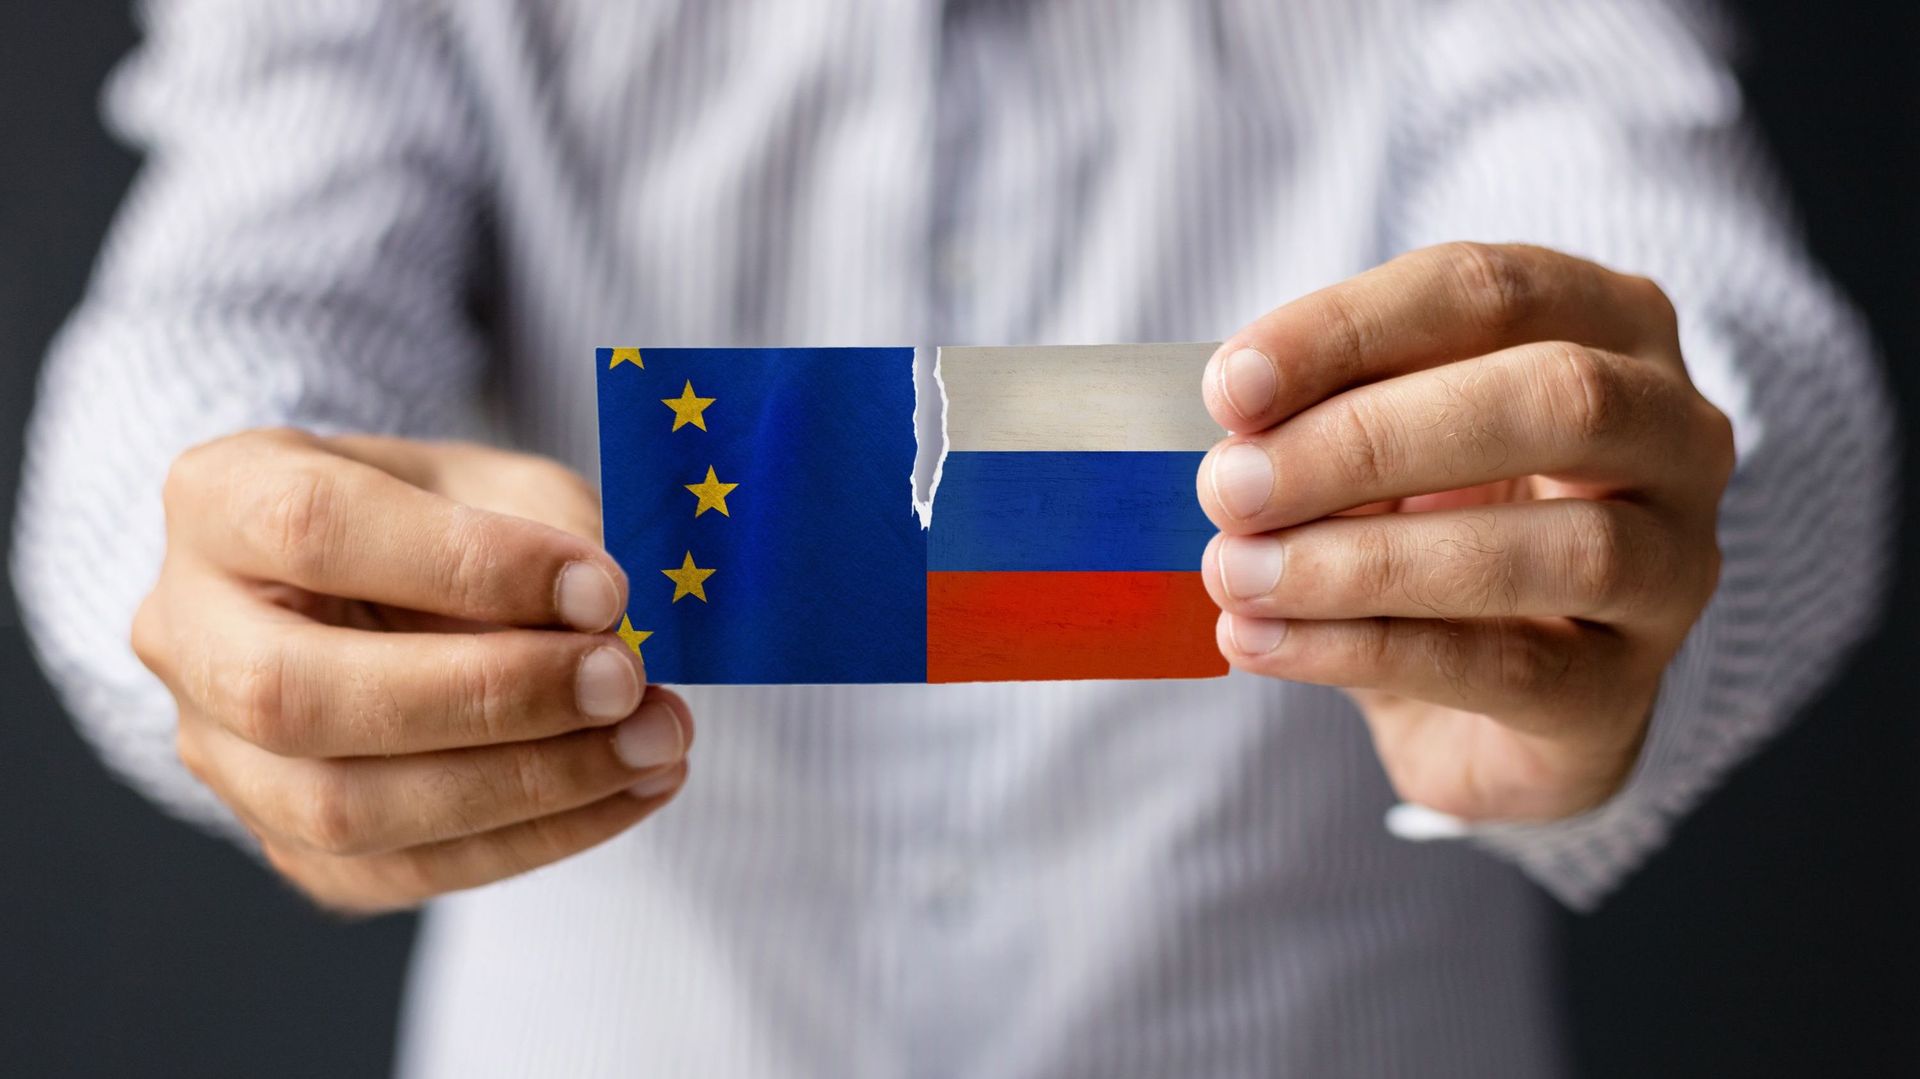 European Union Vs Russia. Close-Up Of Man Holding Eu And Russian Flag.